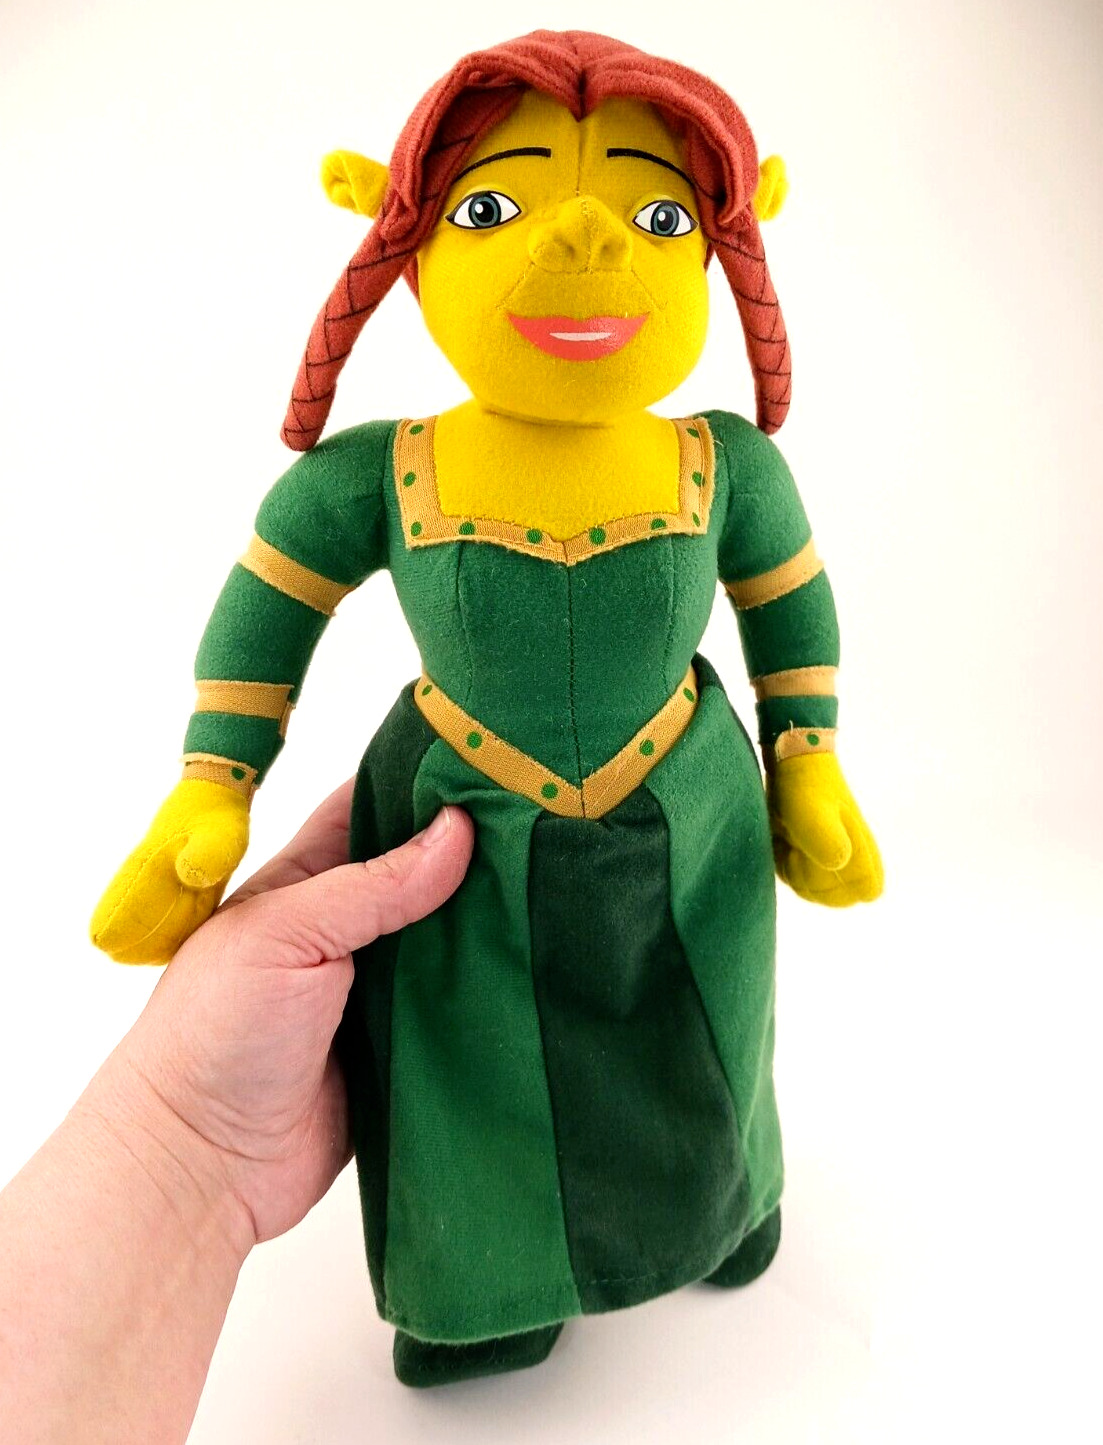 Shrek 2 DreamWorks Fiona by Nanco 10 inch Plush Doll Stuffed 2004 Vintage